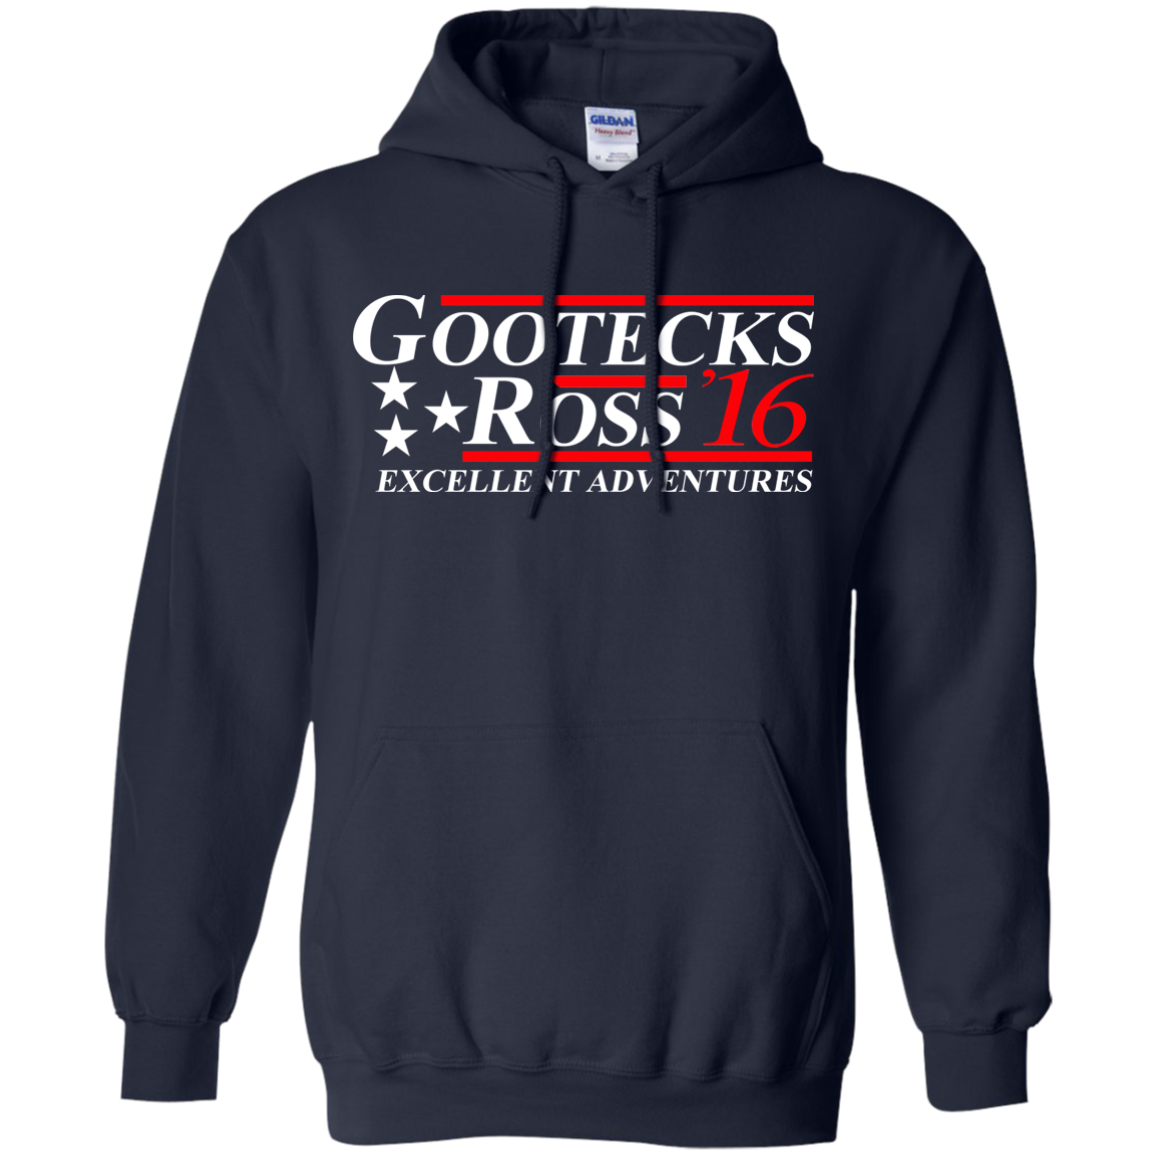 Excellent Adventures Gootecks - Mike Ross Shirt/Hoodie - ifrogtees